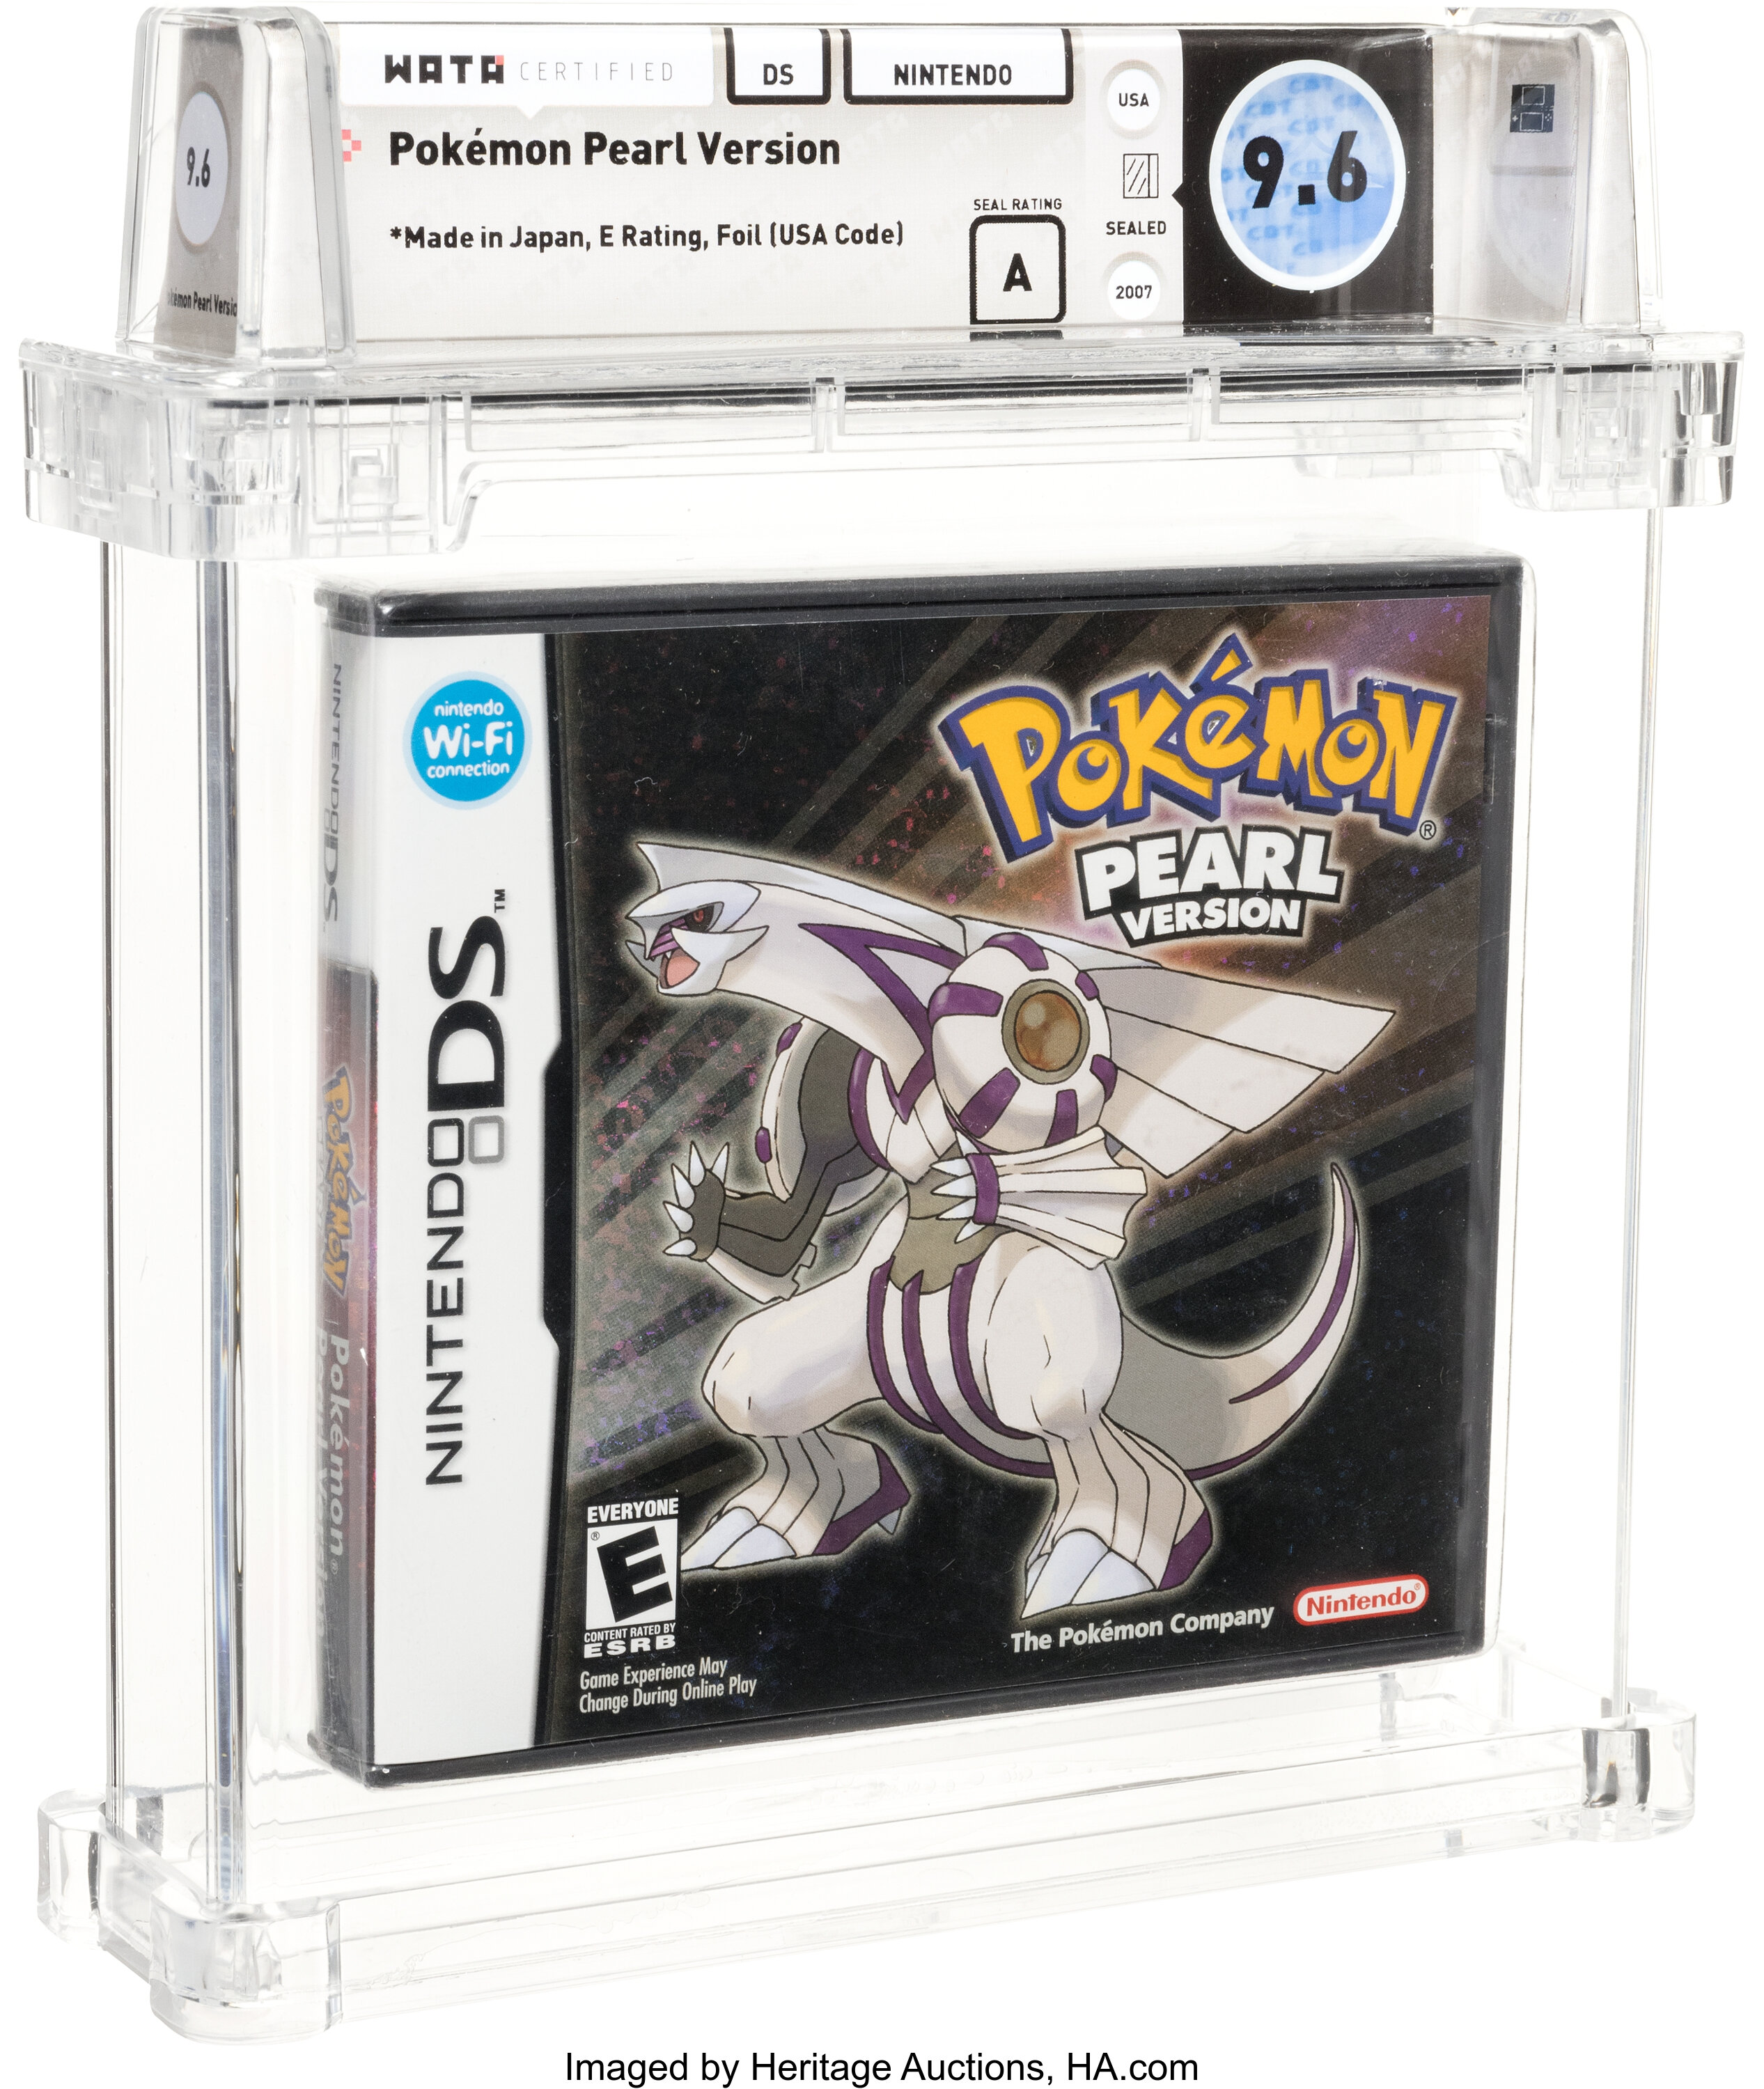 Pokémon Diamond & Pearl (2007), DS Game